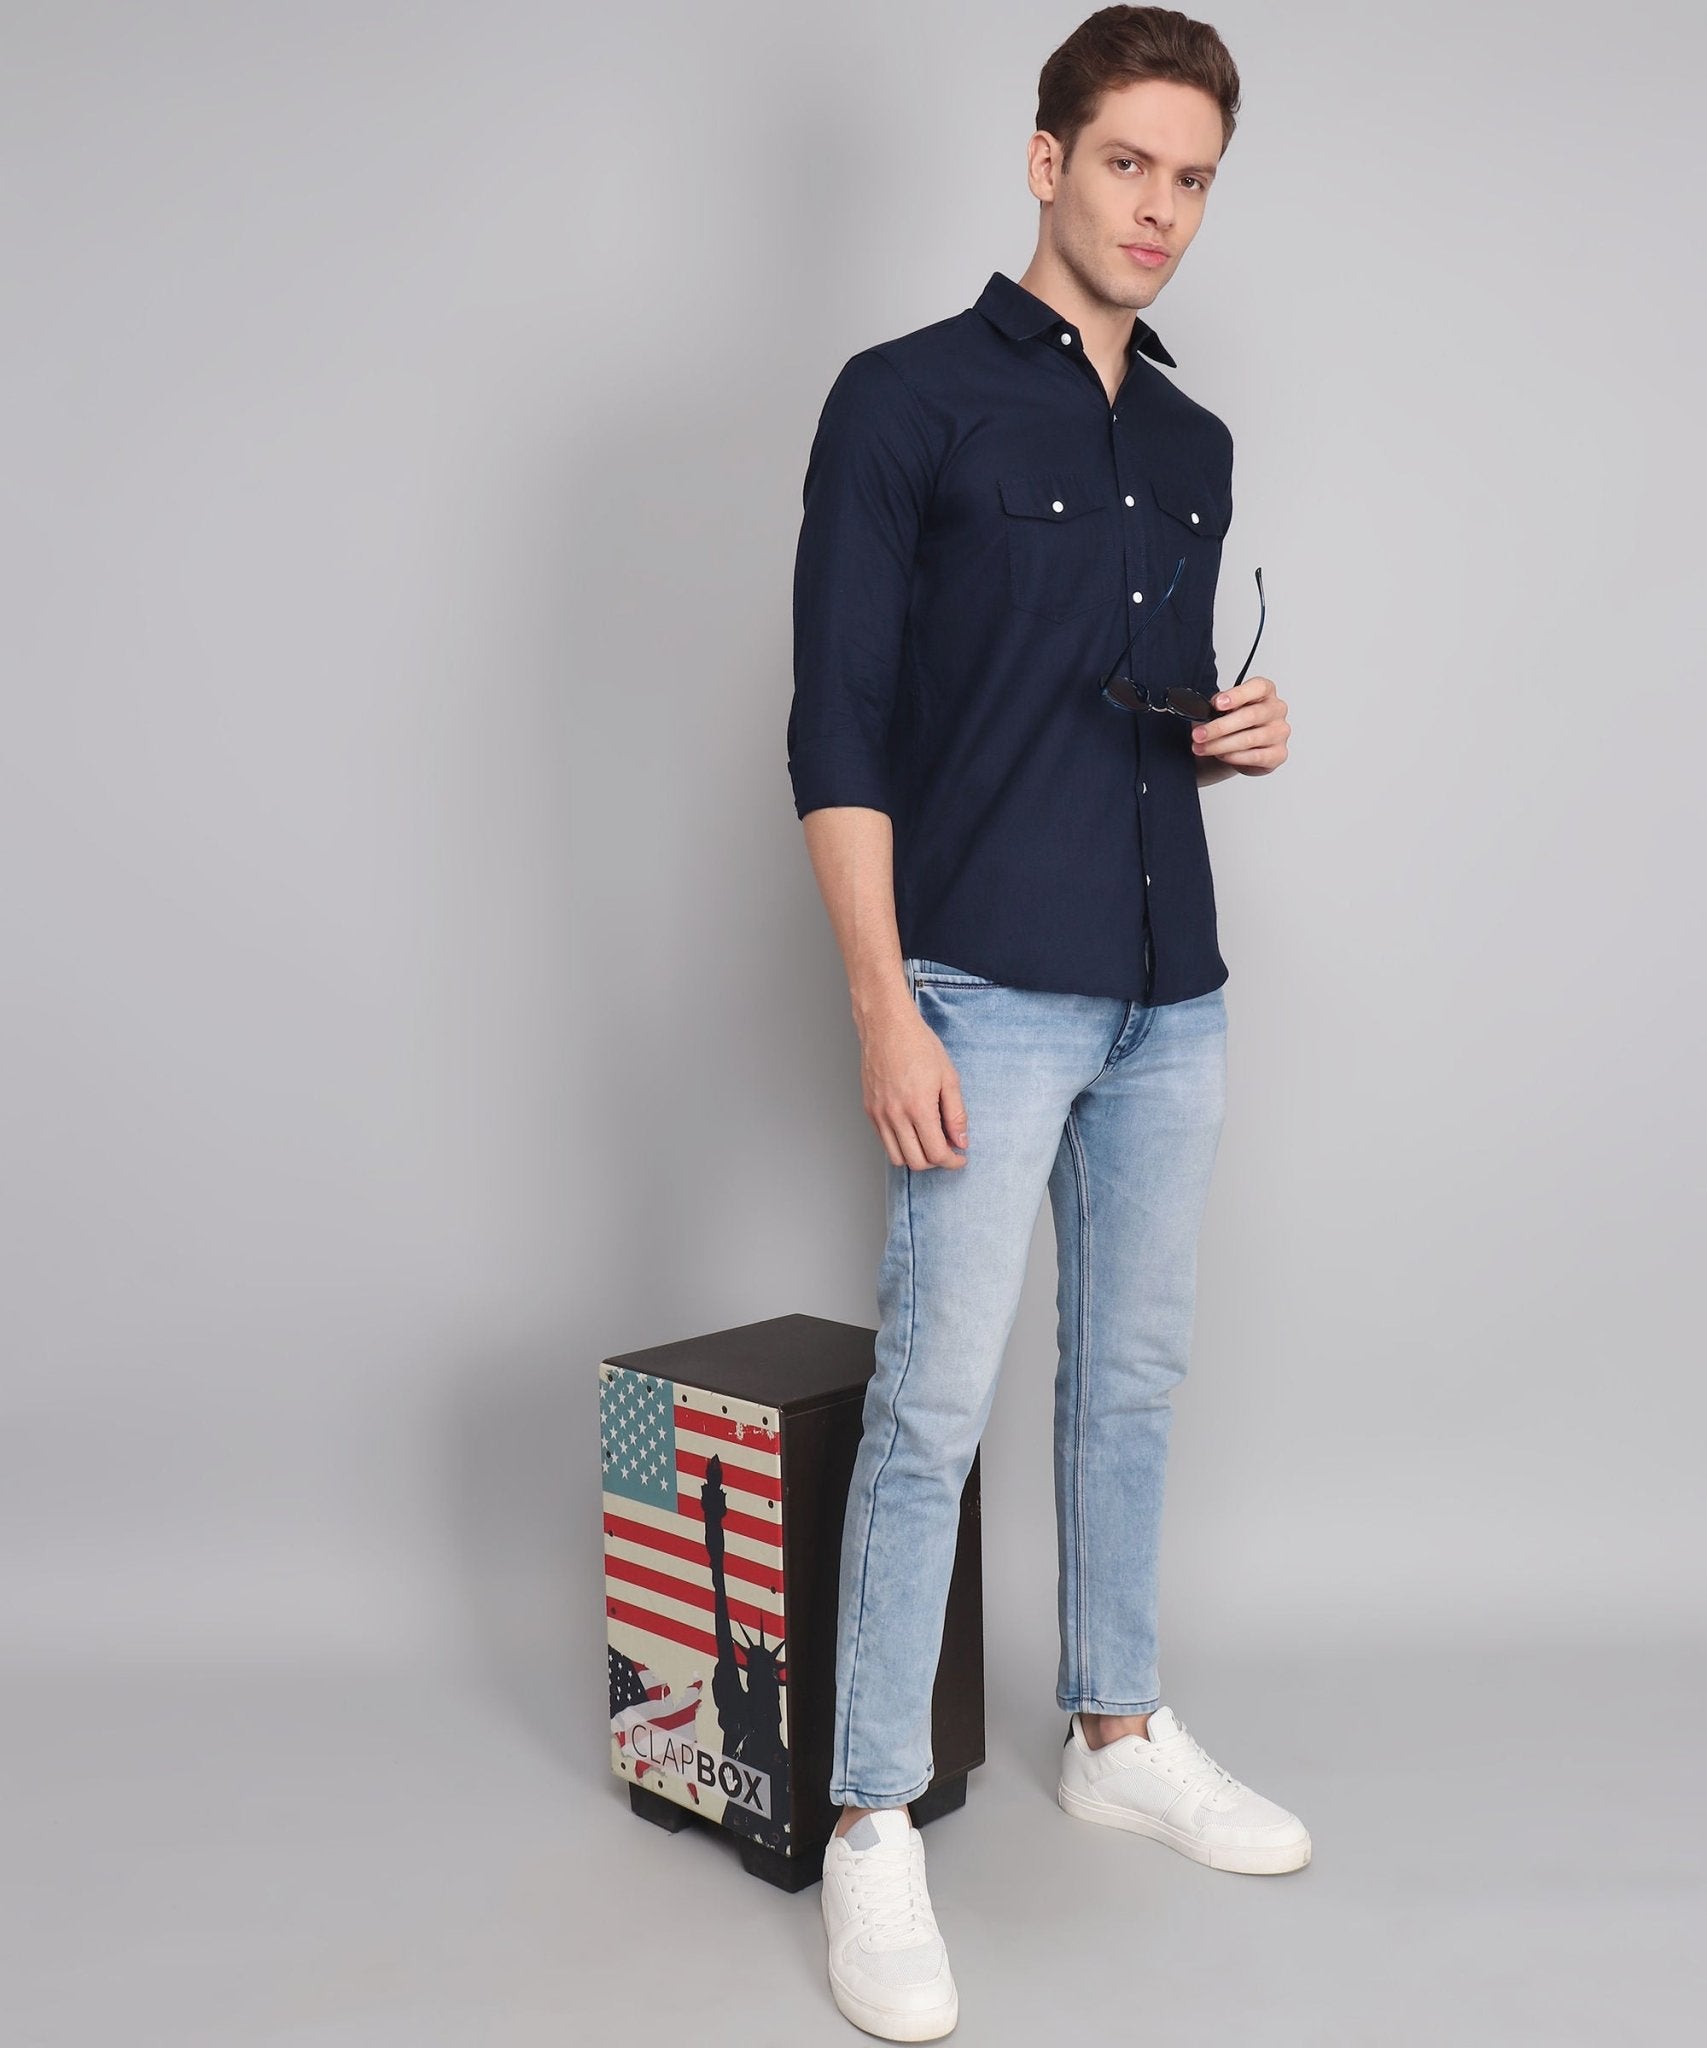 Elite Men's Designer TryBuy Premium Navy Blue Solid Cotton Linen Casual Double Pocket Shirt - TryBuy® USA🇺🇸